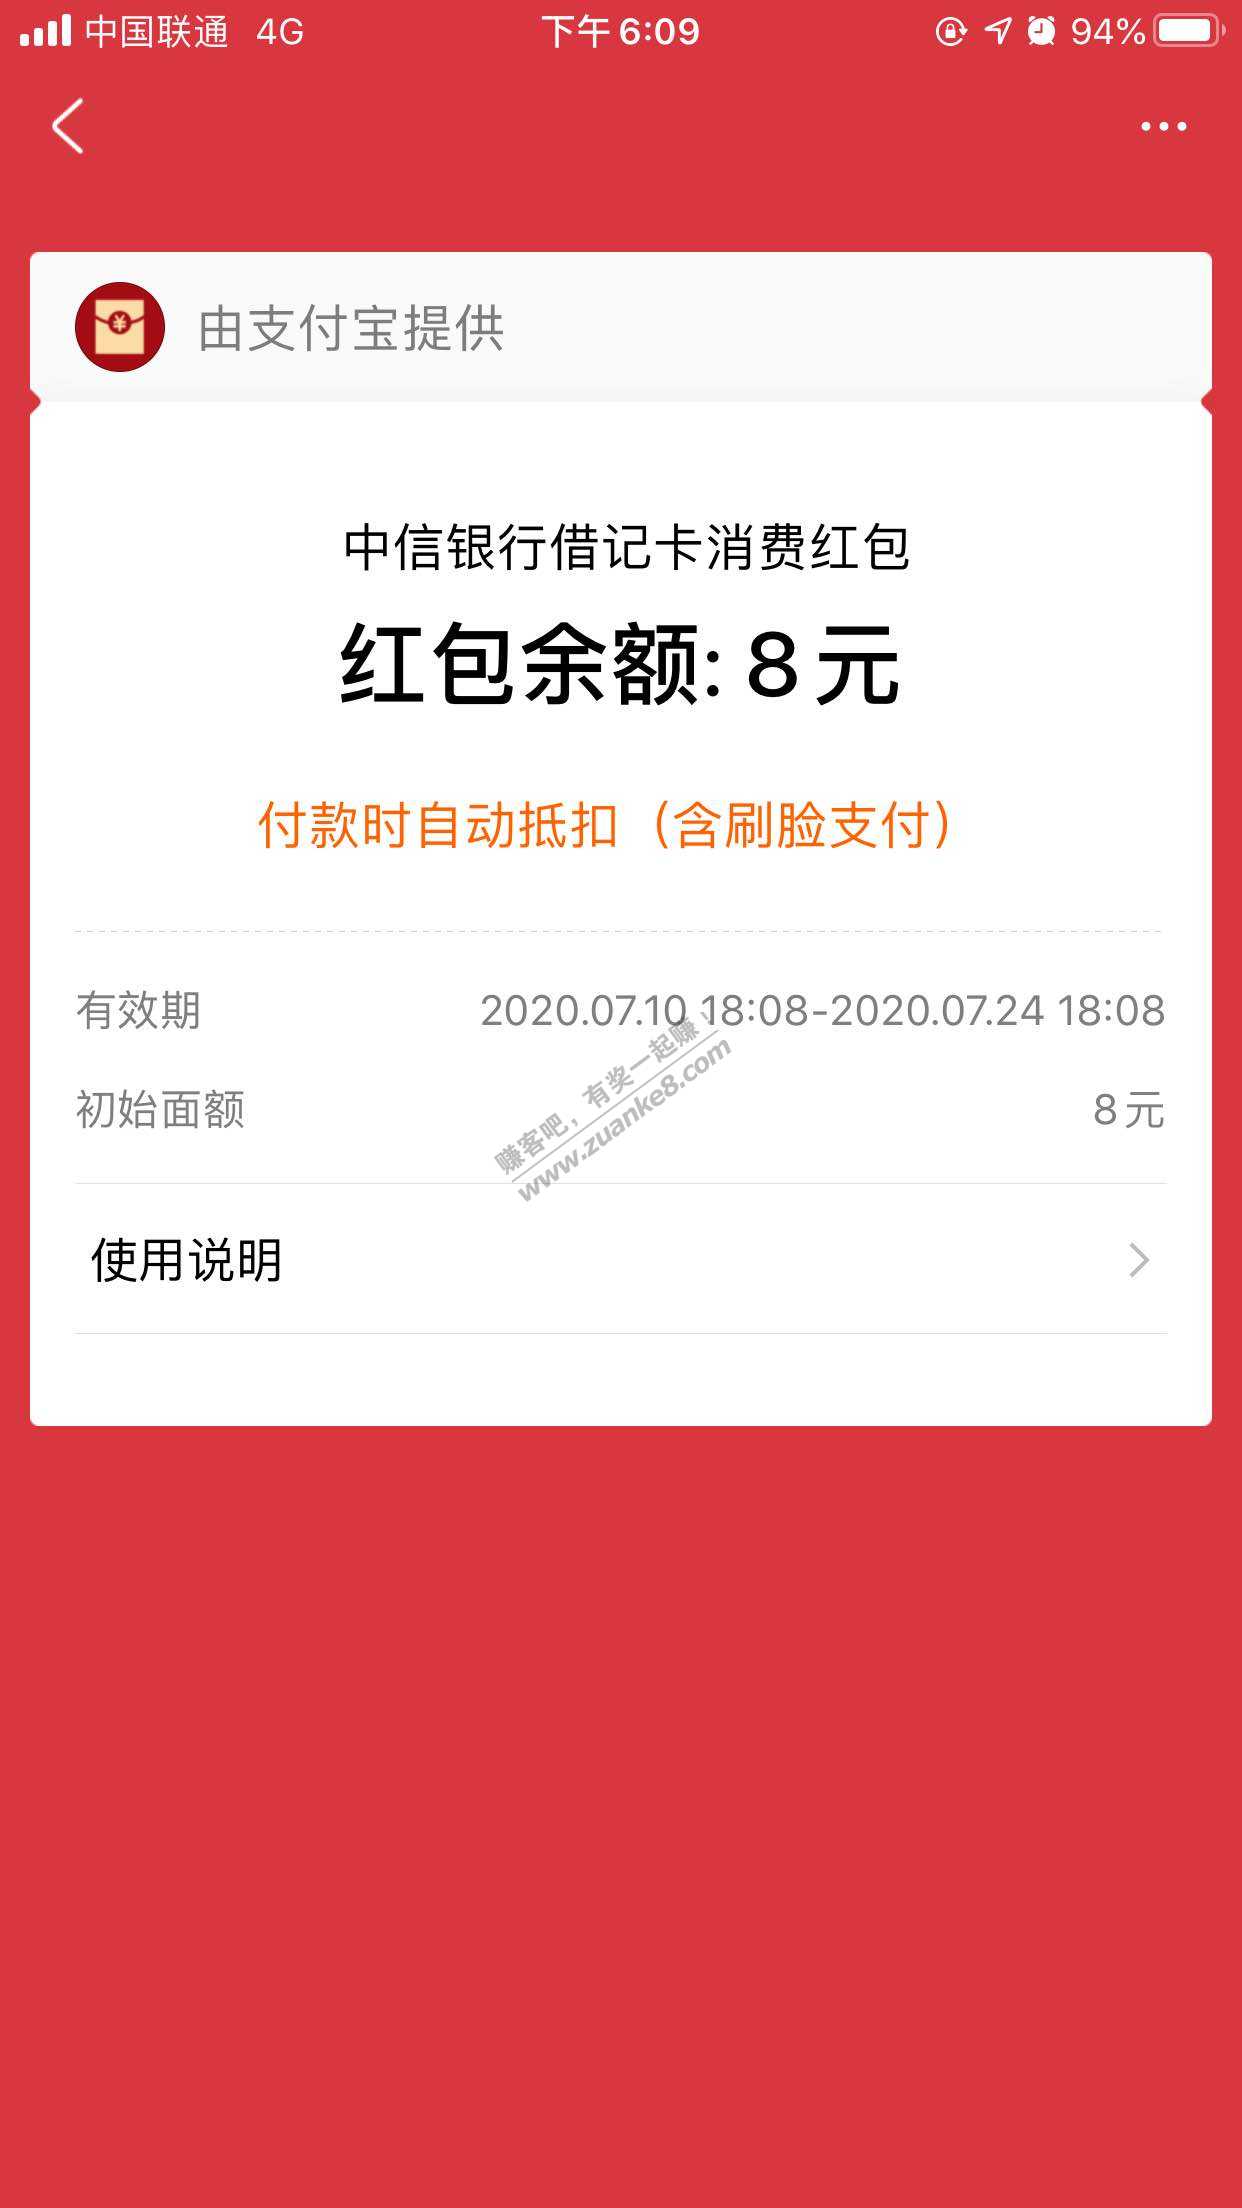 Zfb 首绑中信储蓄卡得八元红包-惠小助(52huixz.com)